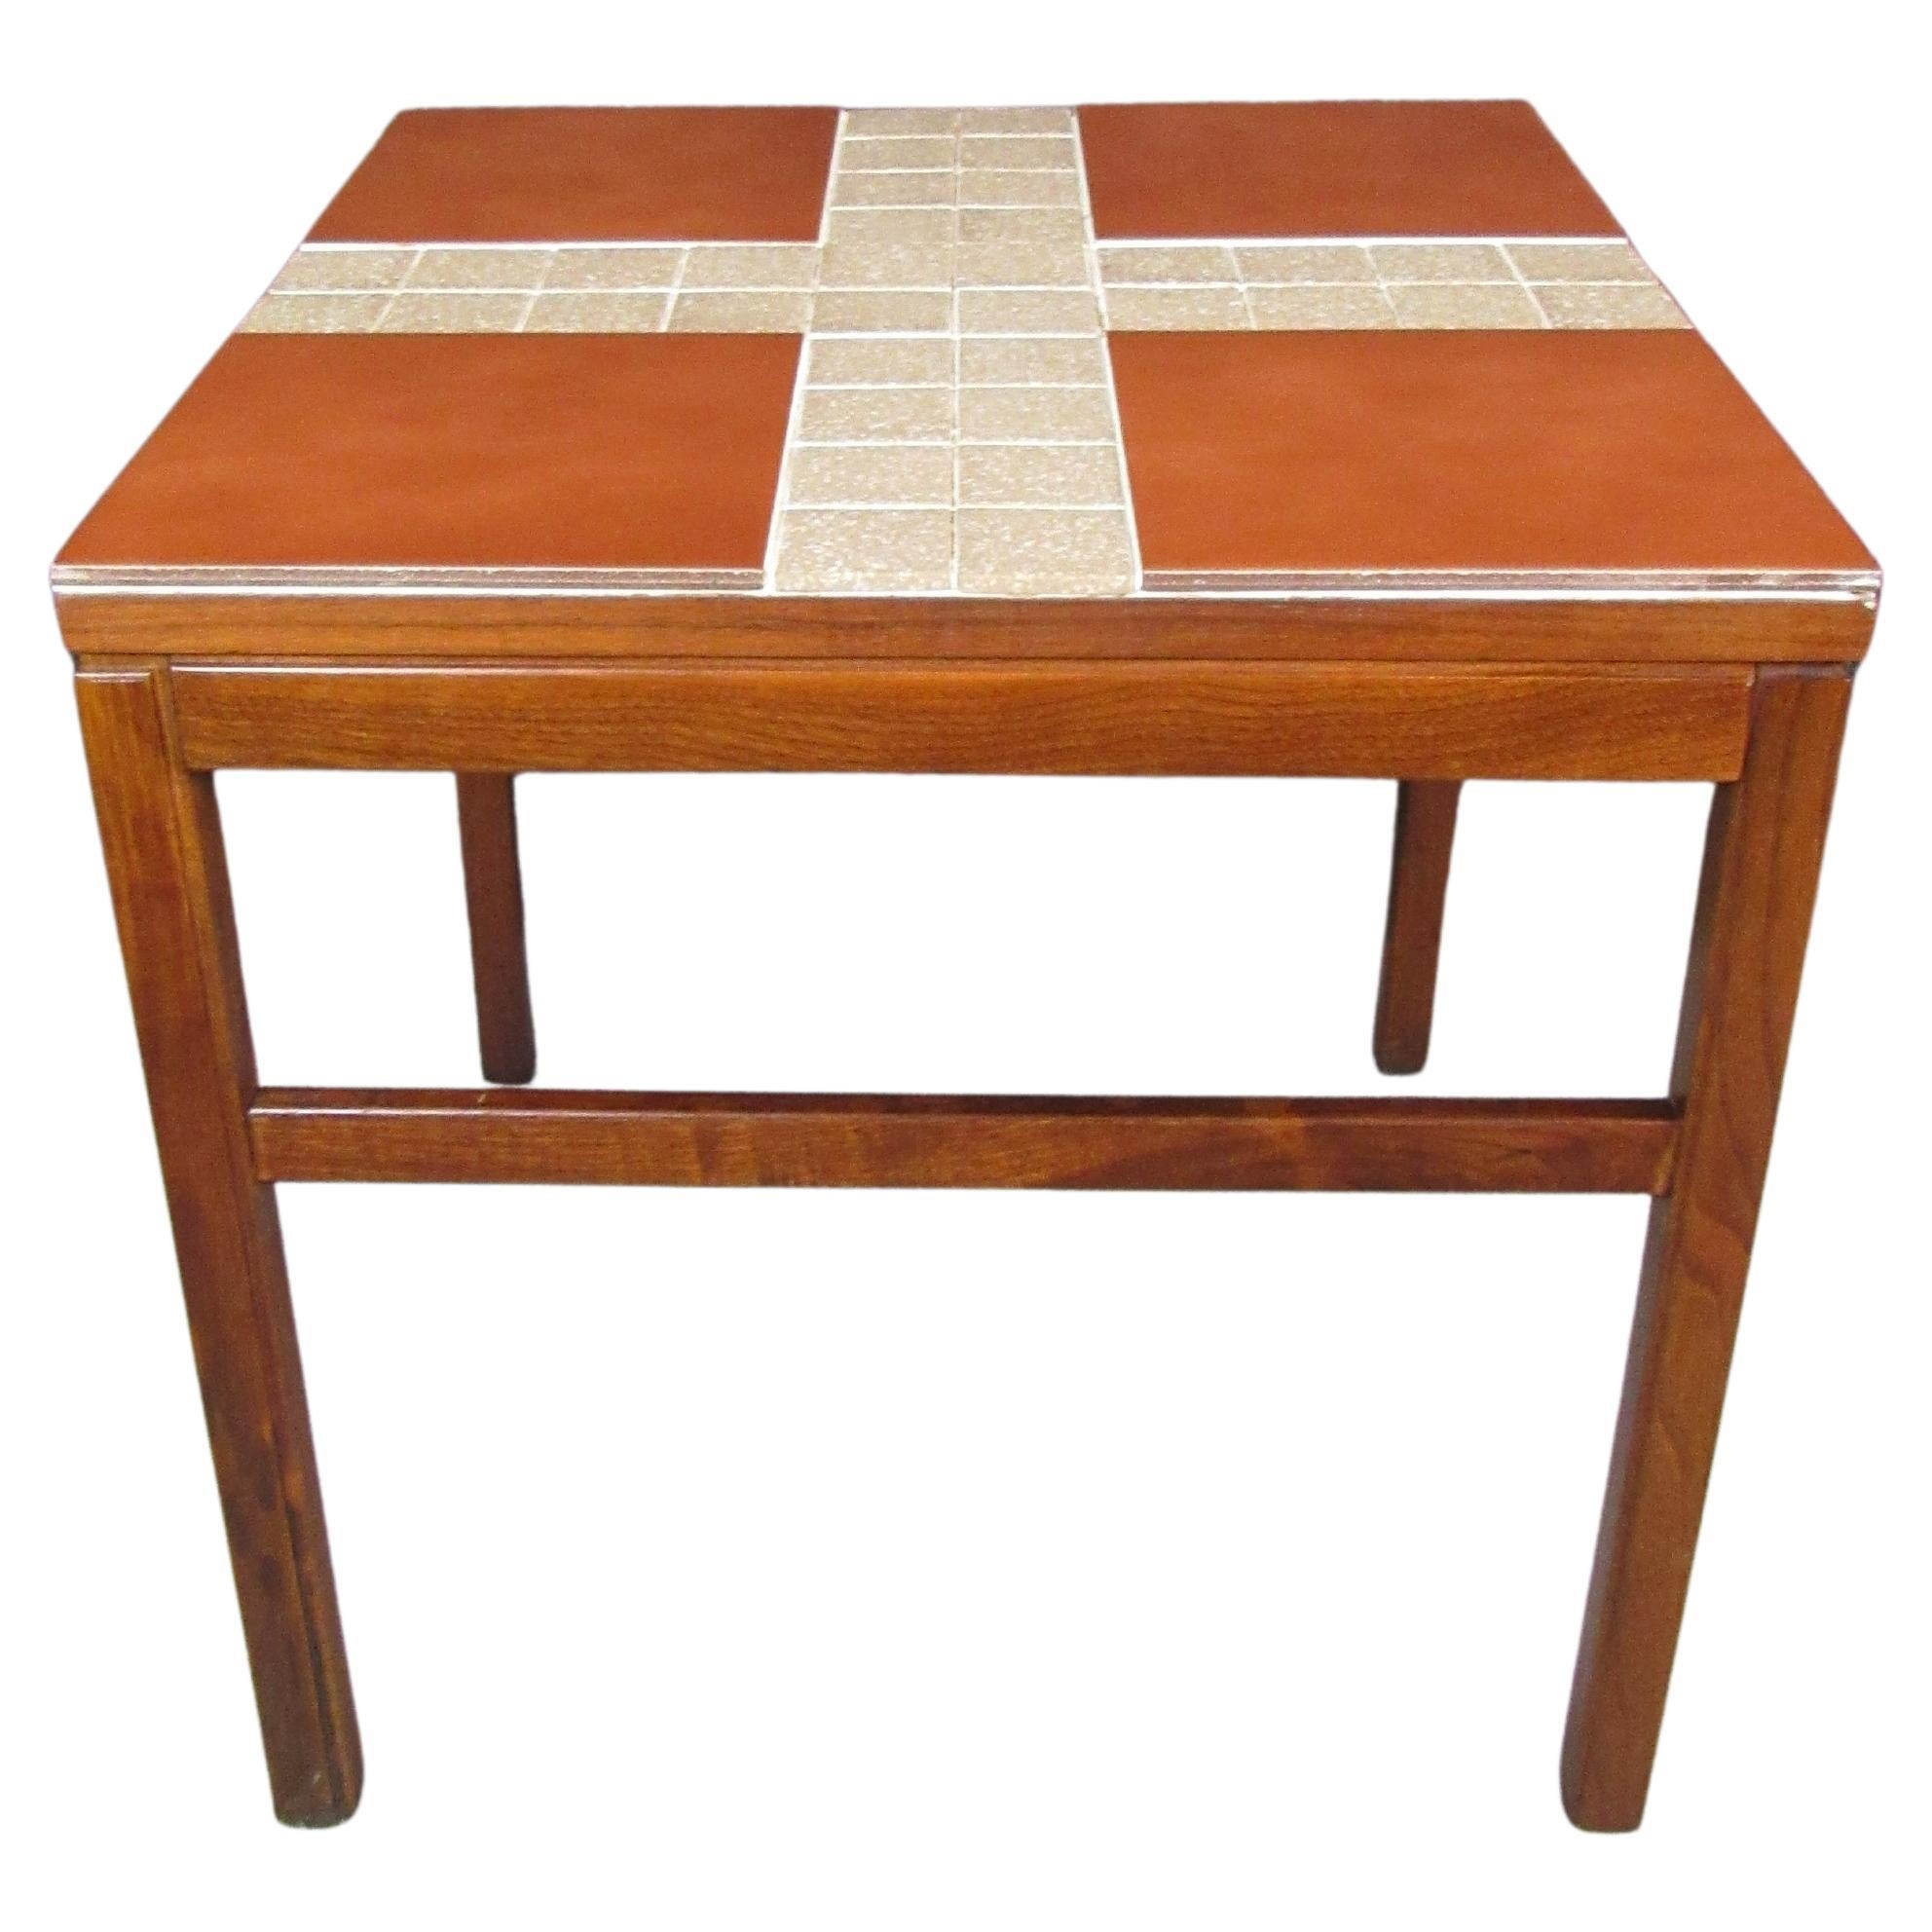 Vintage Terracota Tile & Teak Table by Arbatove For Sale